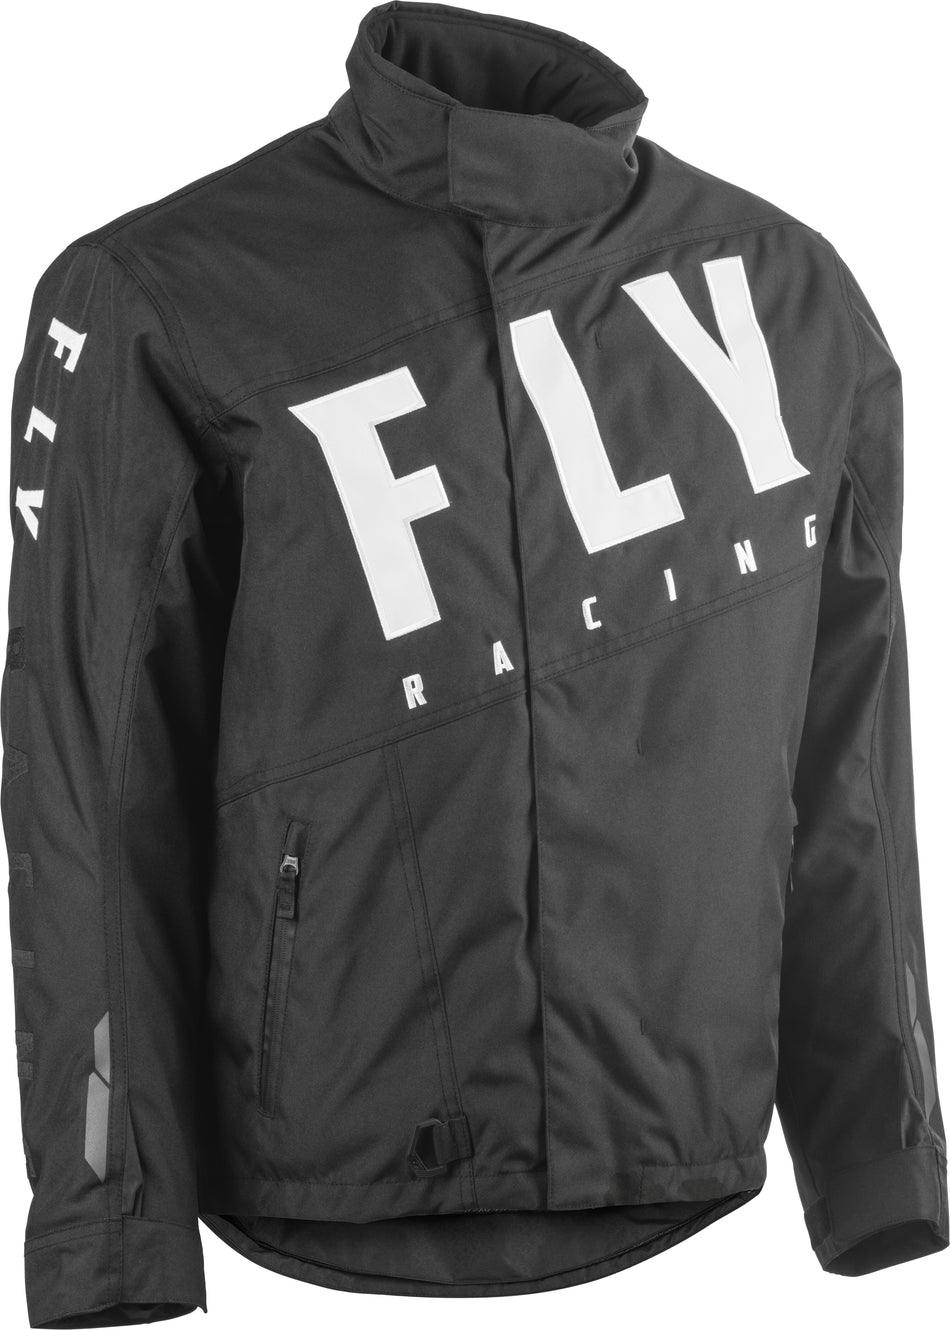 FLY RACING Fly Snx Pro Jacket Black Yxs 470-4110YXS